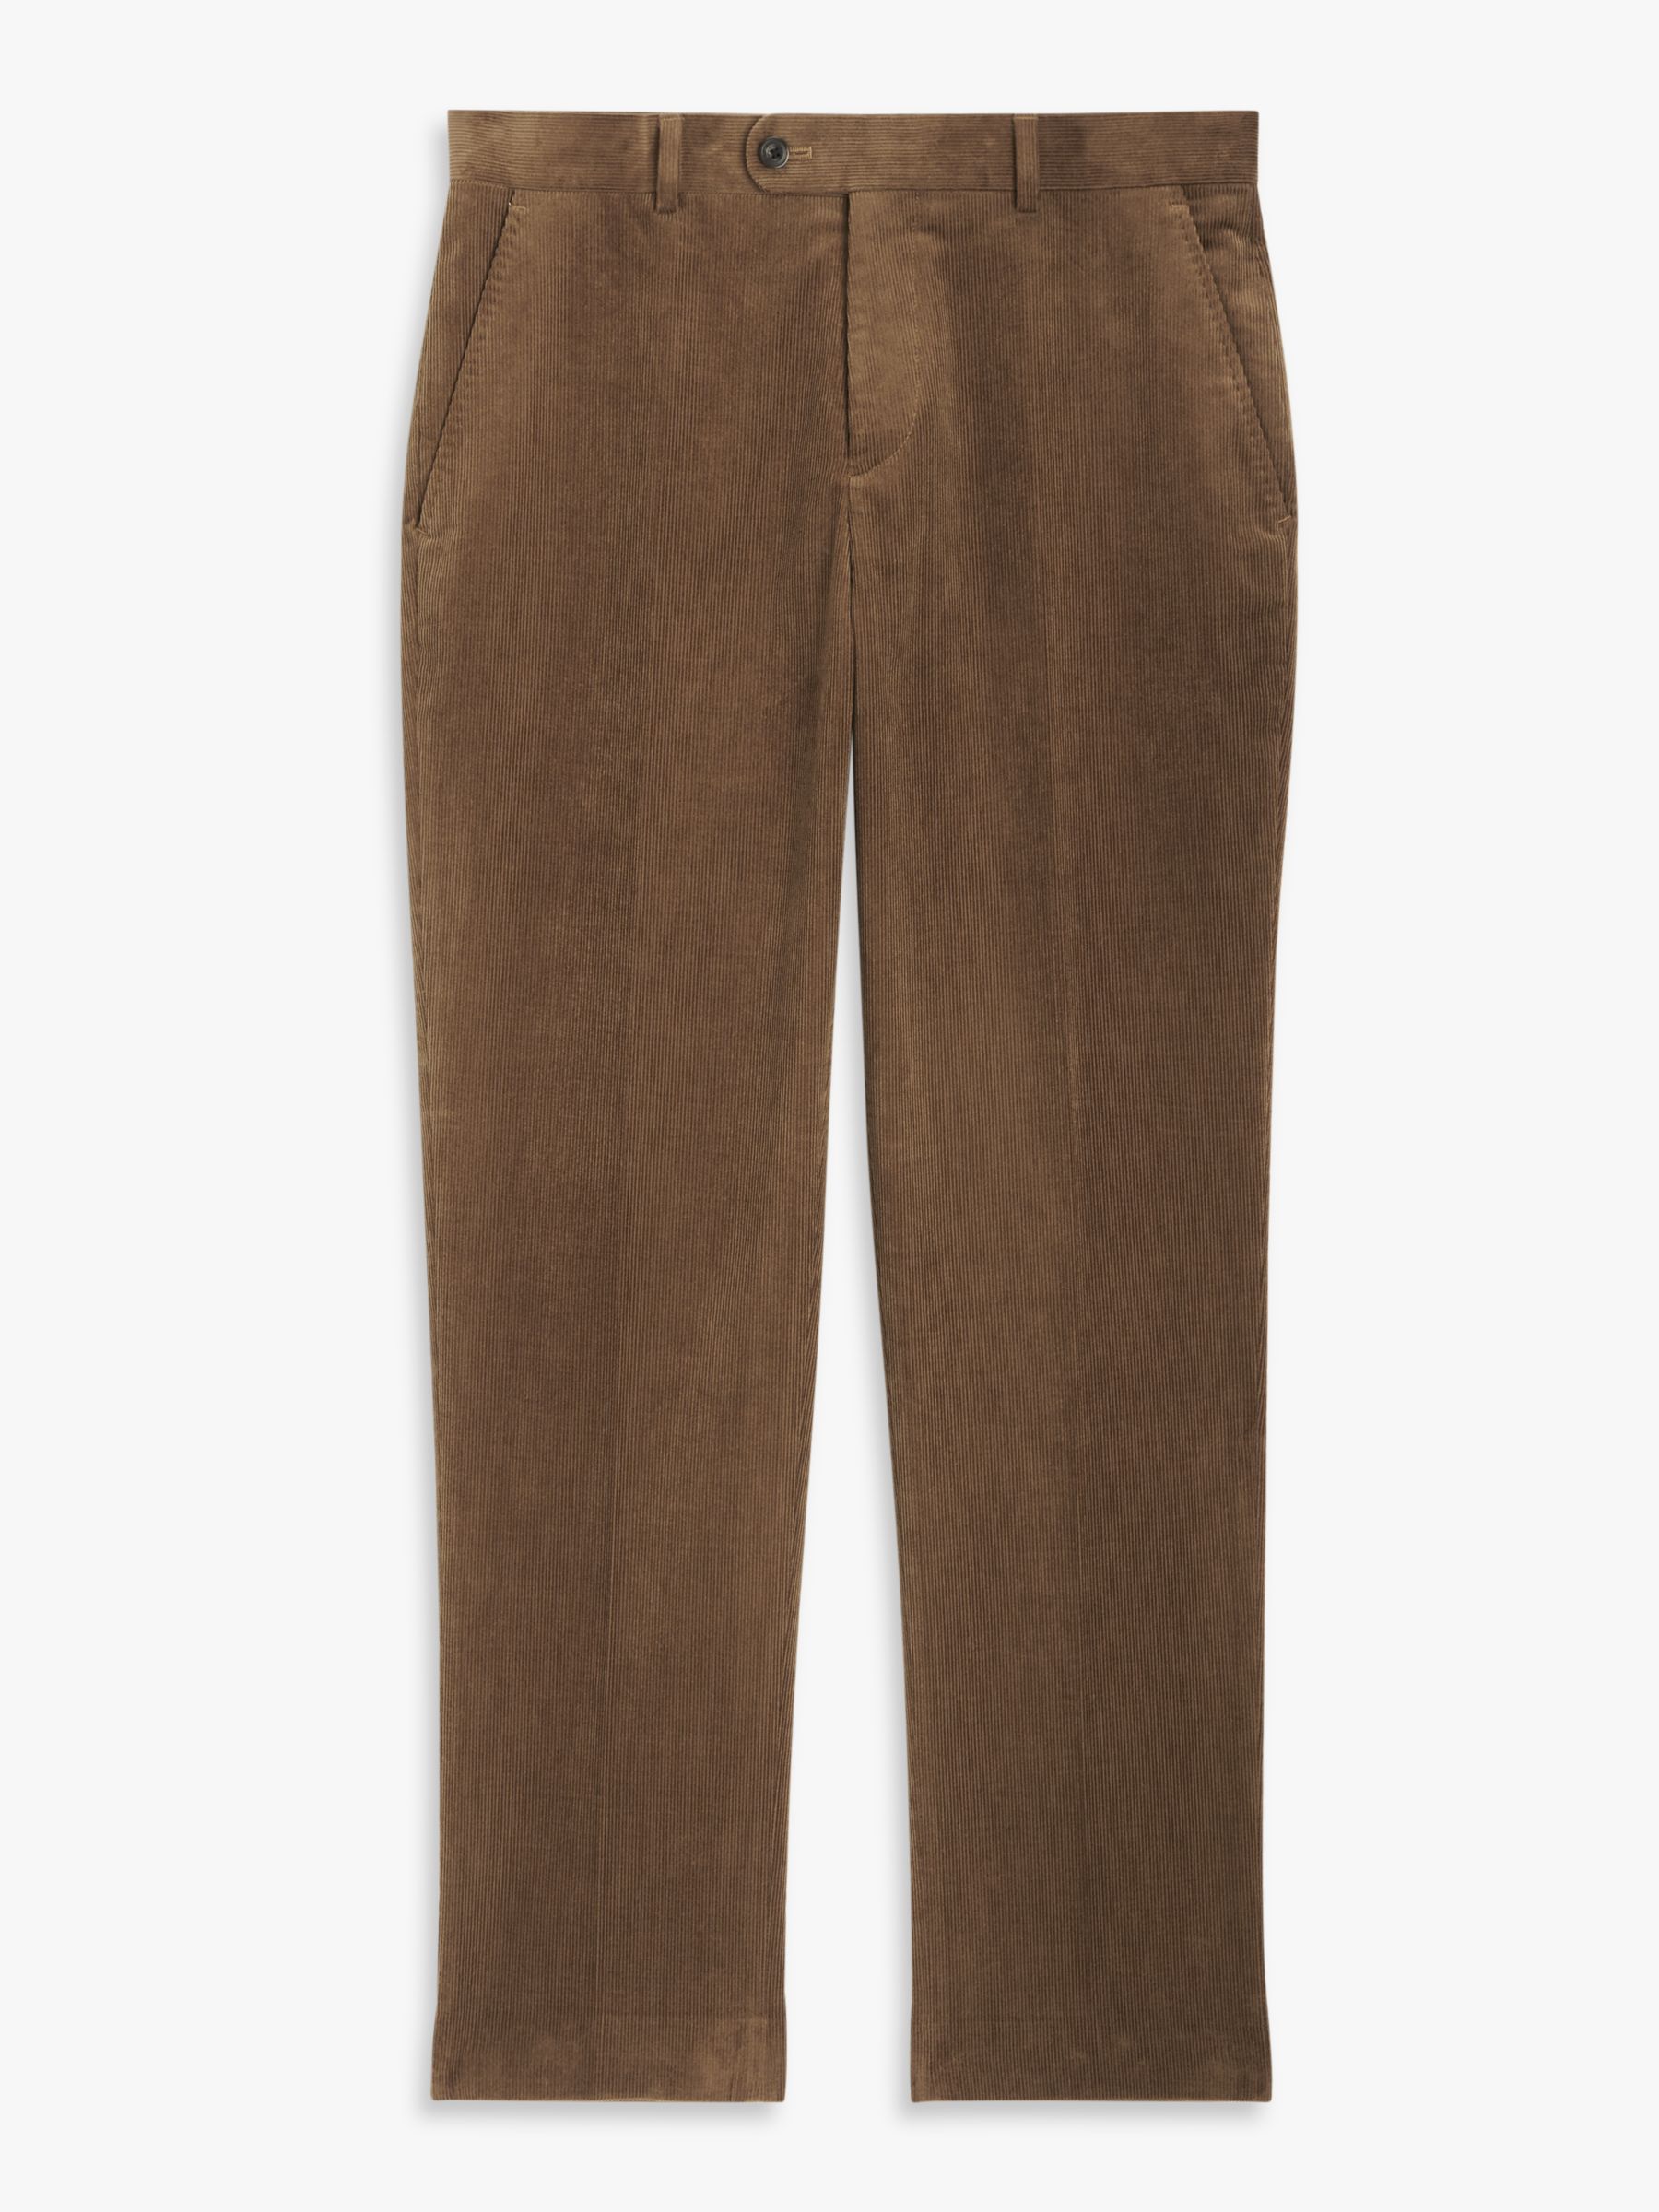 John Lewis Corduroy Regular Fit Trousers, Taupe, 40L